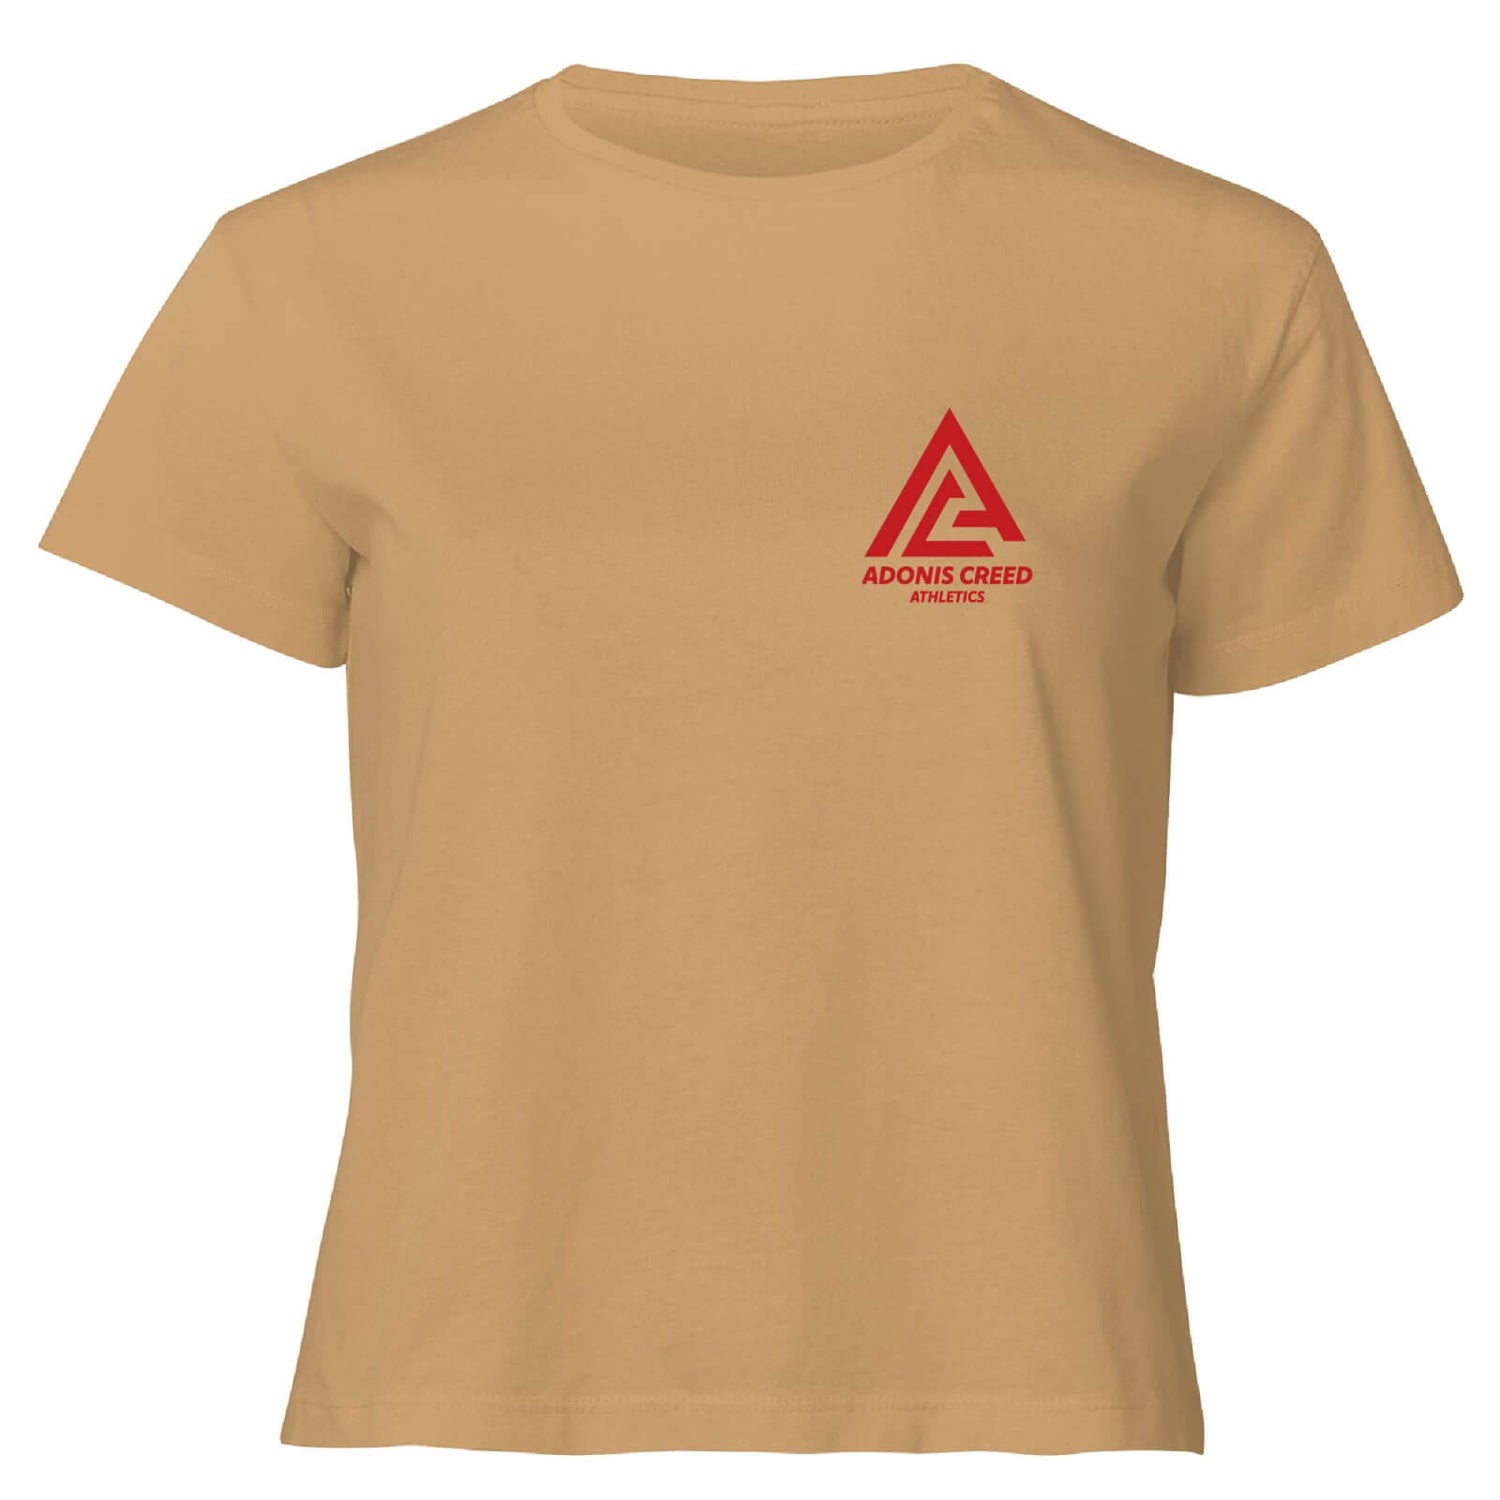 Creed Adonis Creed Athletics Logo Women's Cropped T-Shirt - Tan